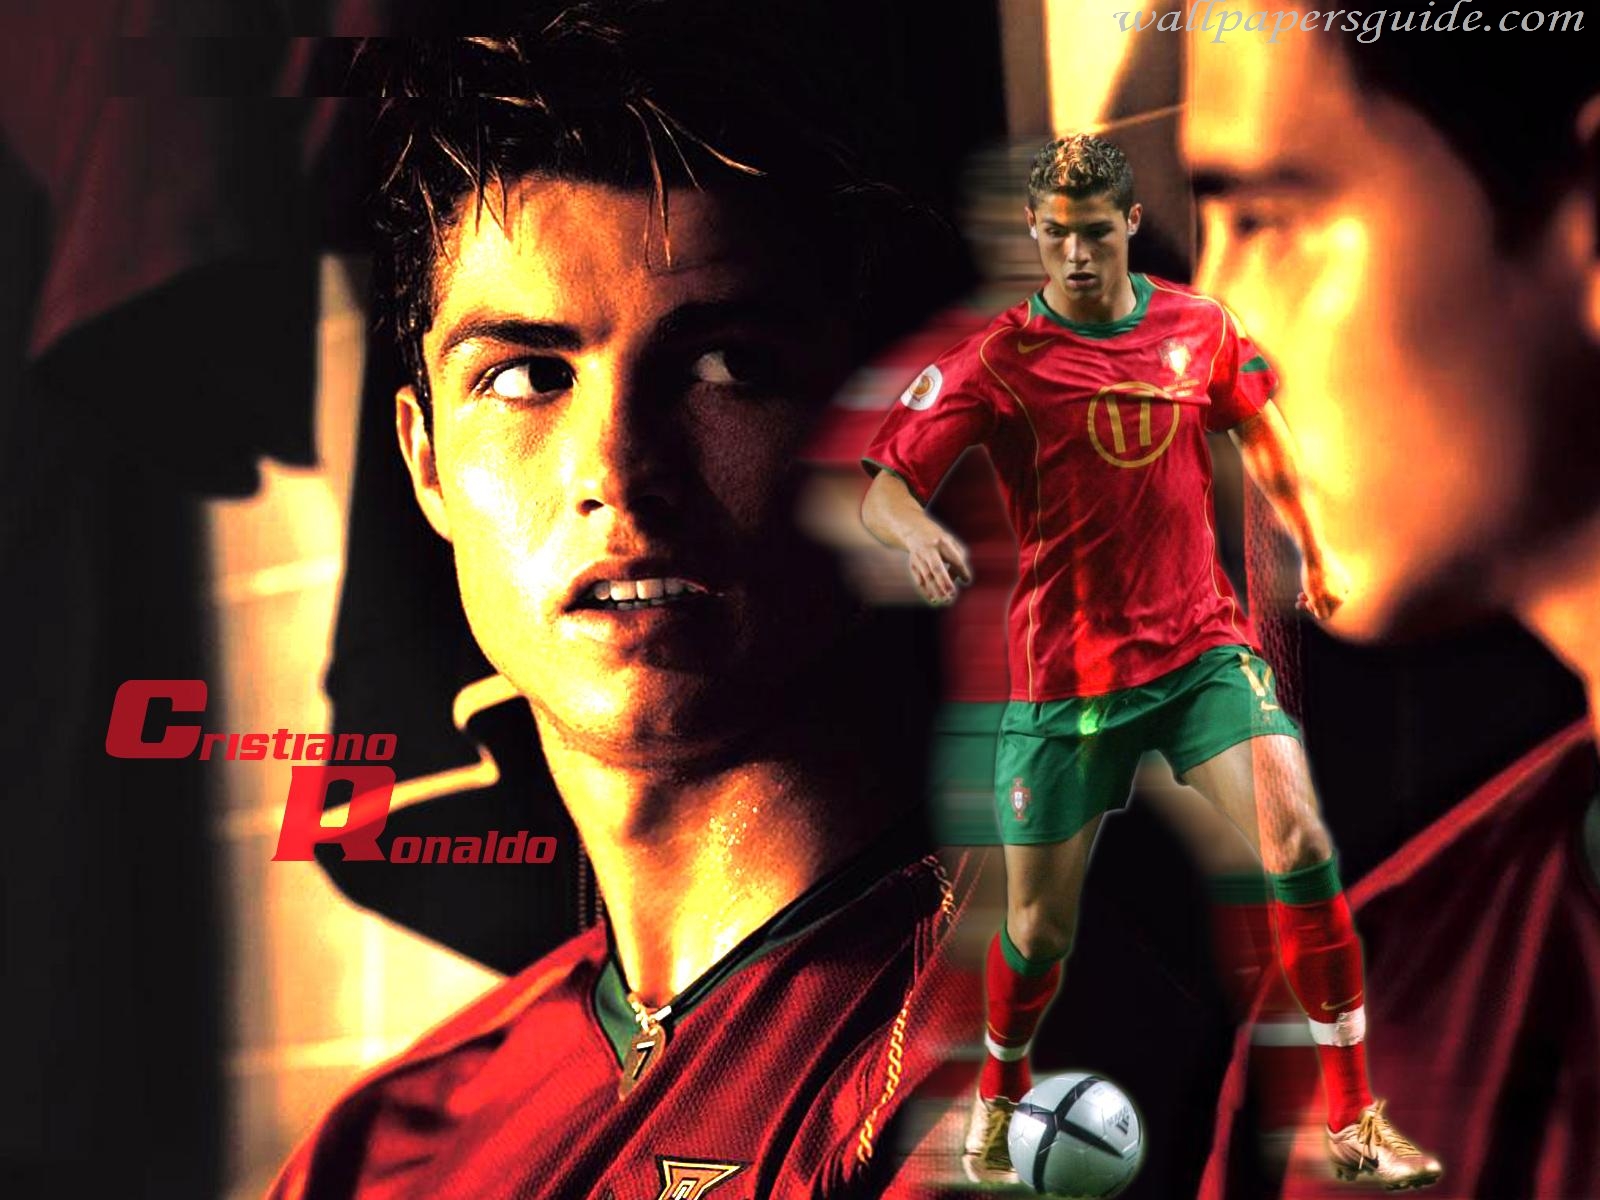 http://3.bp.blogspot.com/-StJZvJHFJT4/Td2oZLsRyXI/AAAAAAAAAO4/hGw_SiBQaiw/s1600/Cristiano-Ronaldo-HD-Wallpapers-2011.jpg